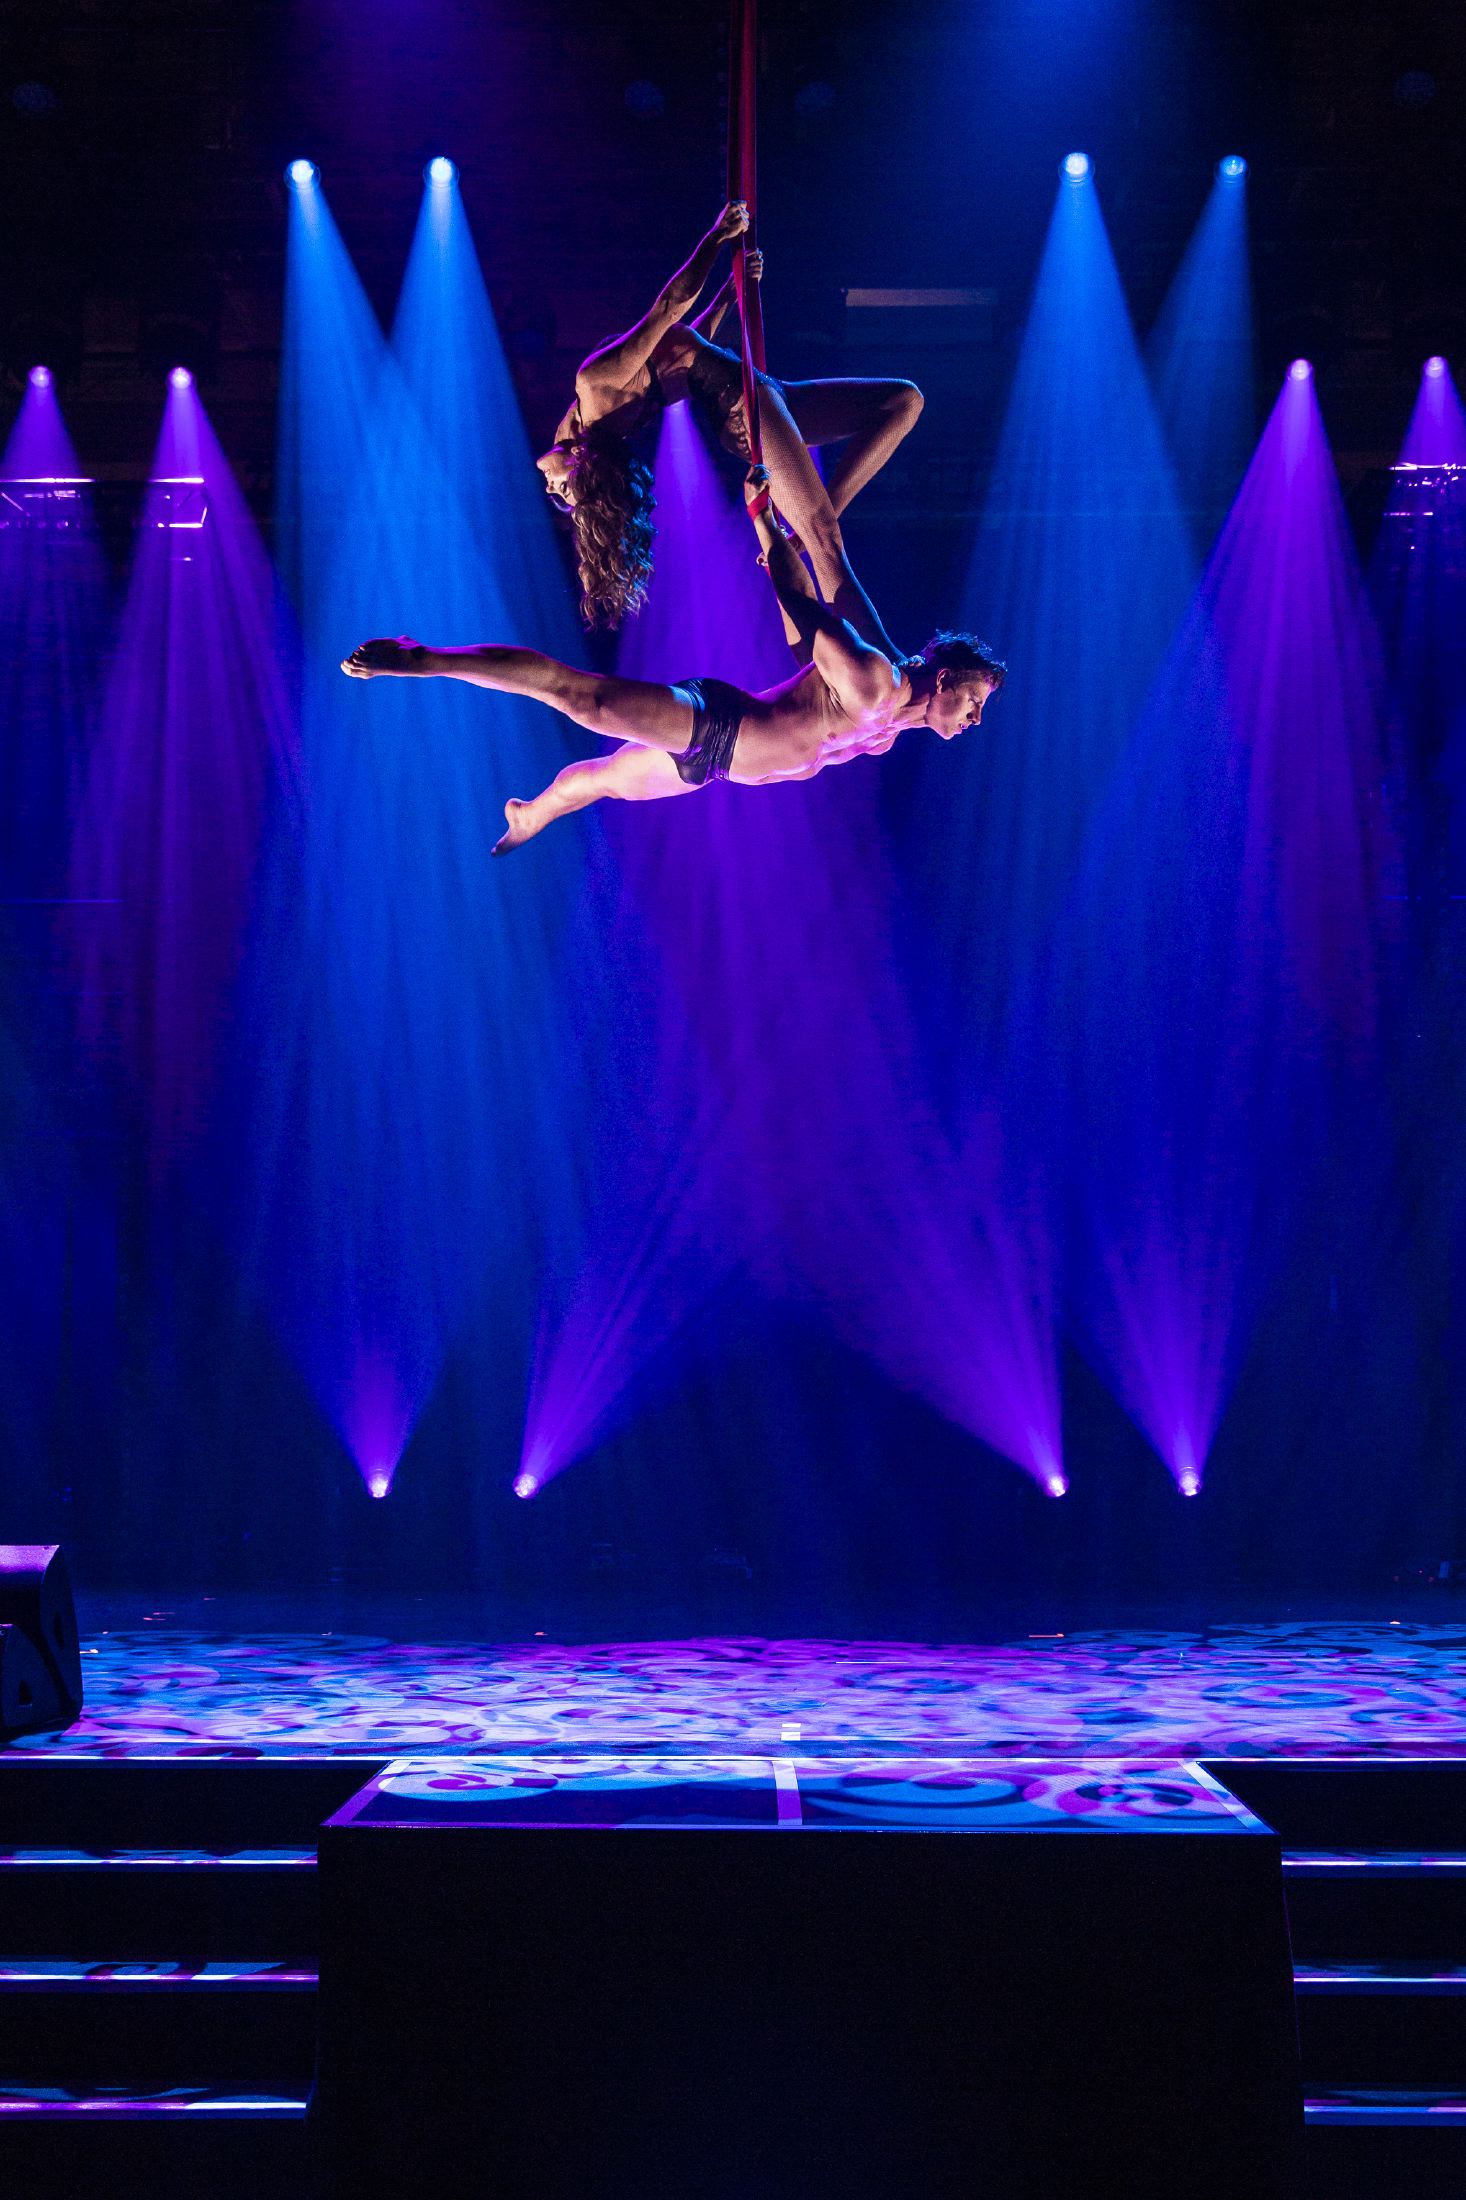 aerialstraps duo, duo strapaten, acrobatic couple, luftartistik showact